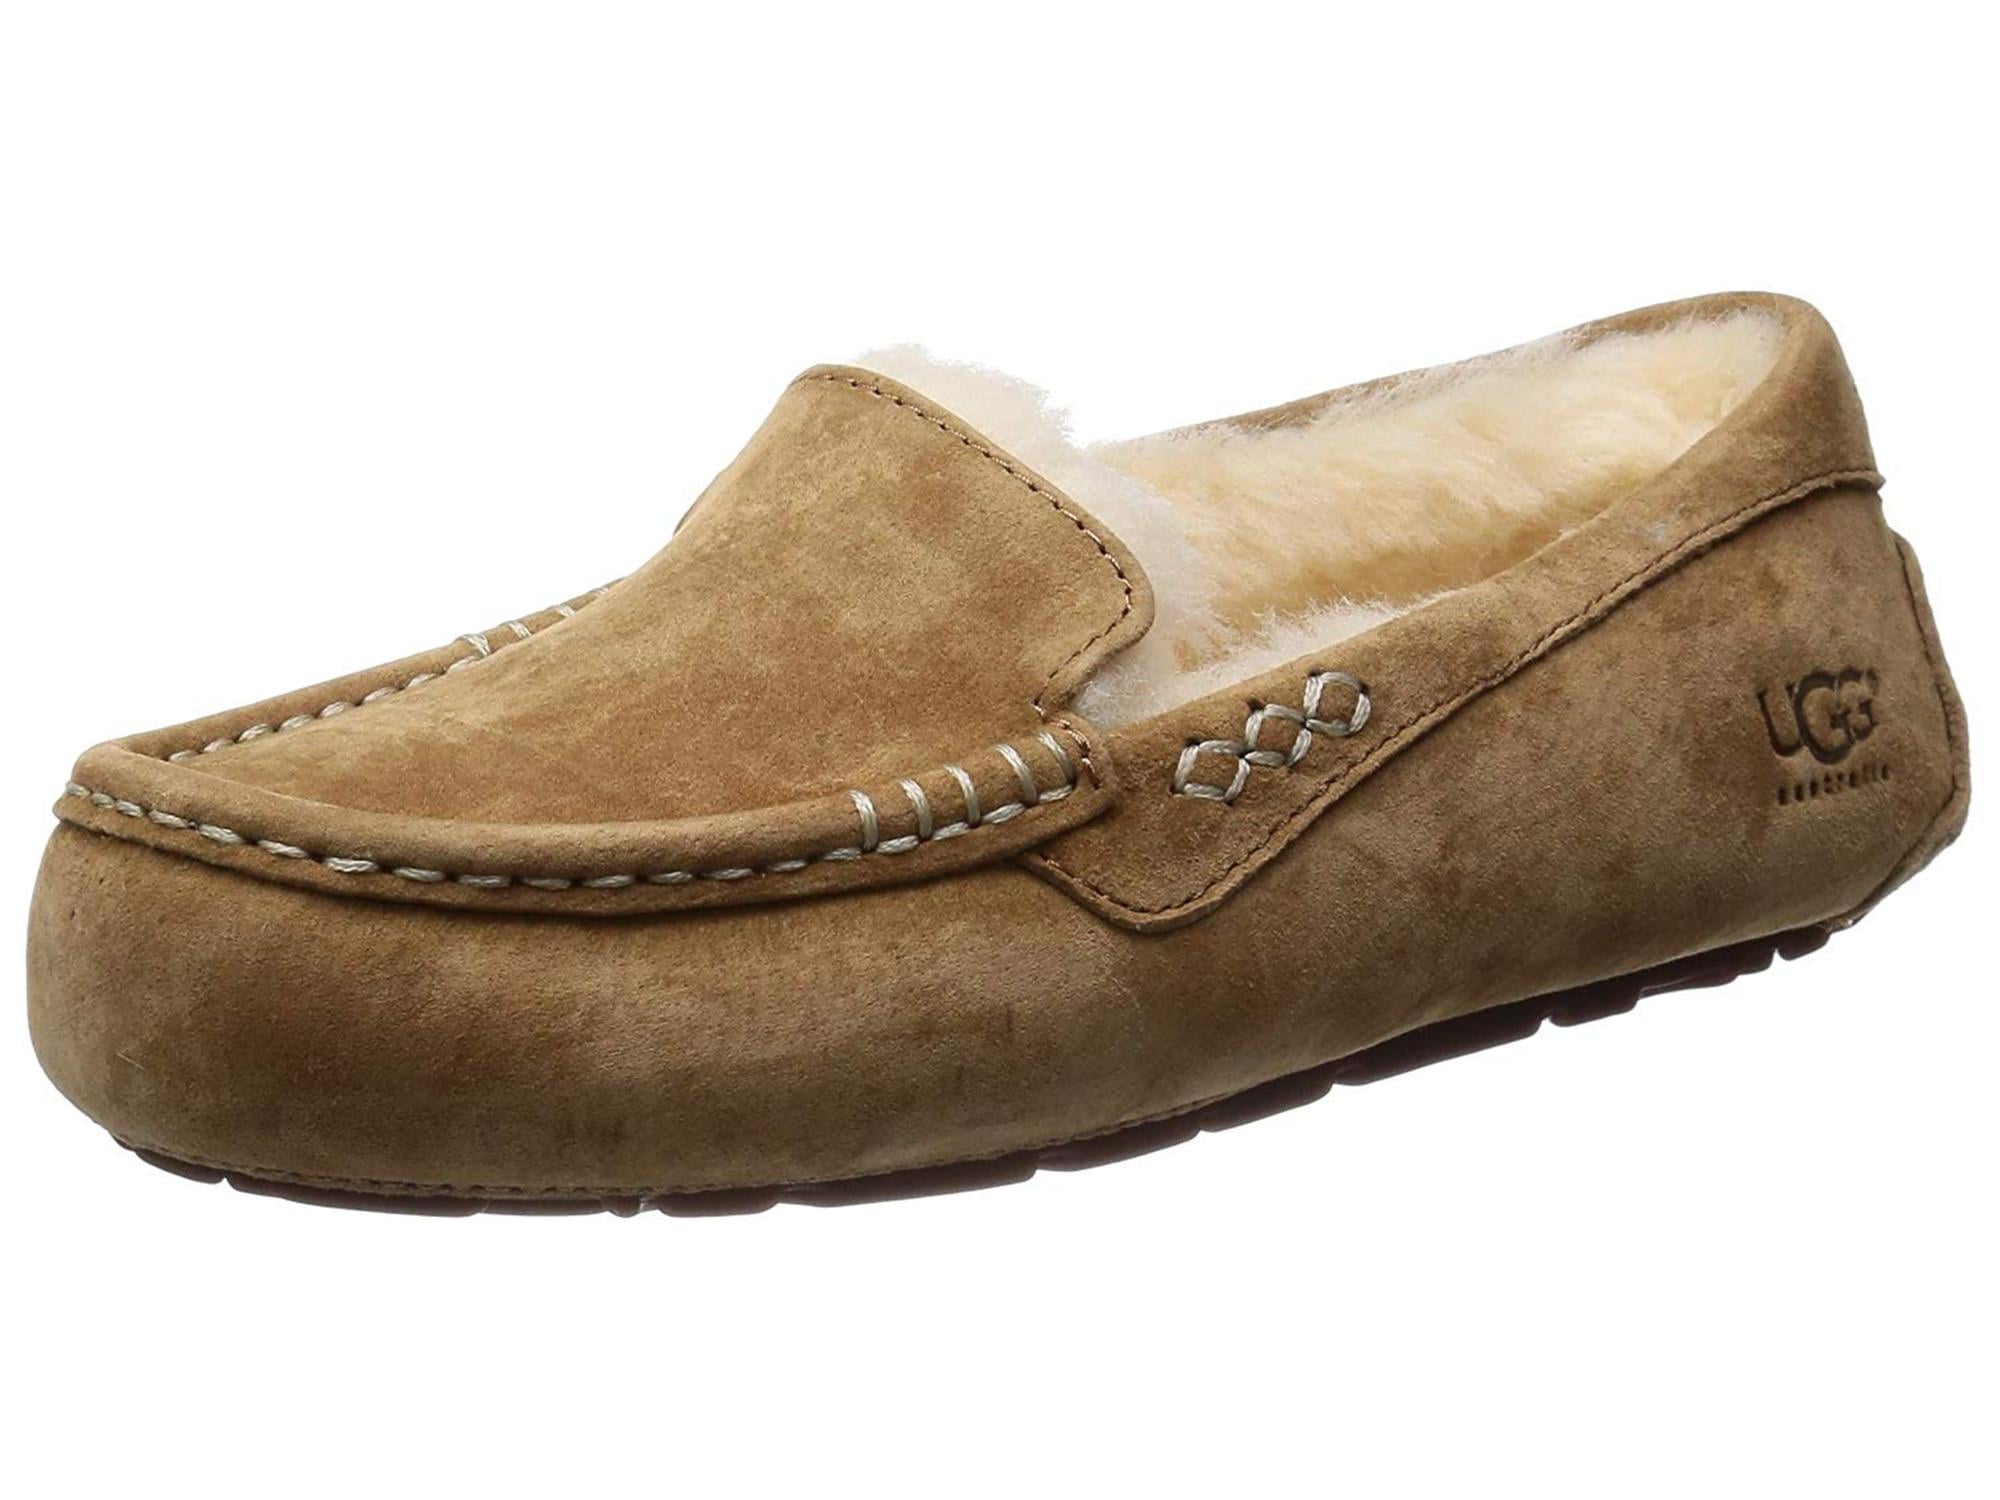 size 8 ugg ansley slippers